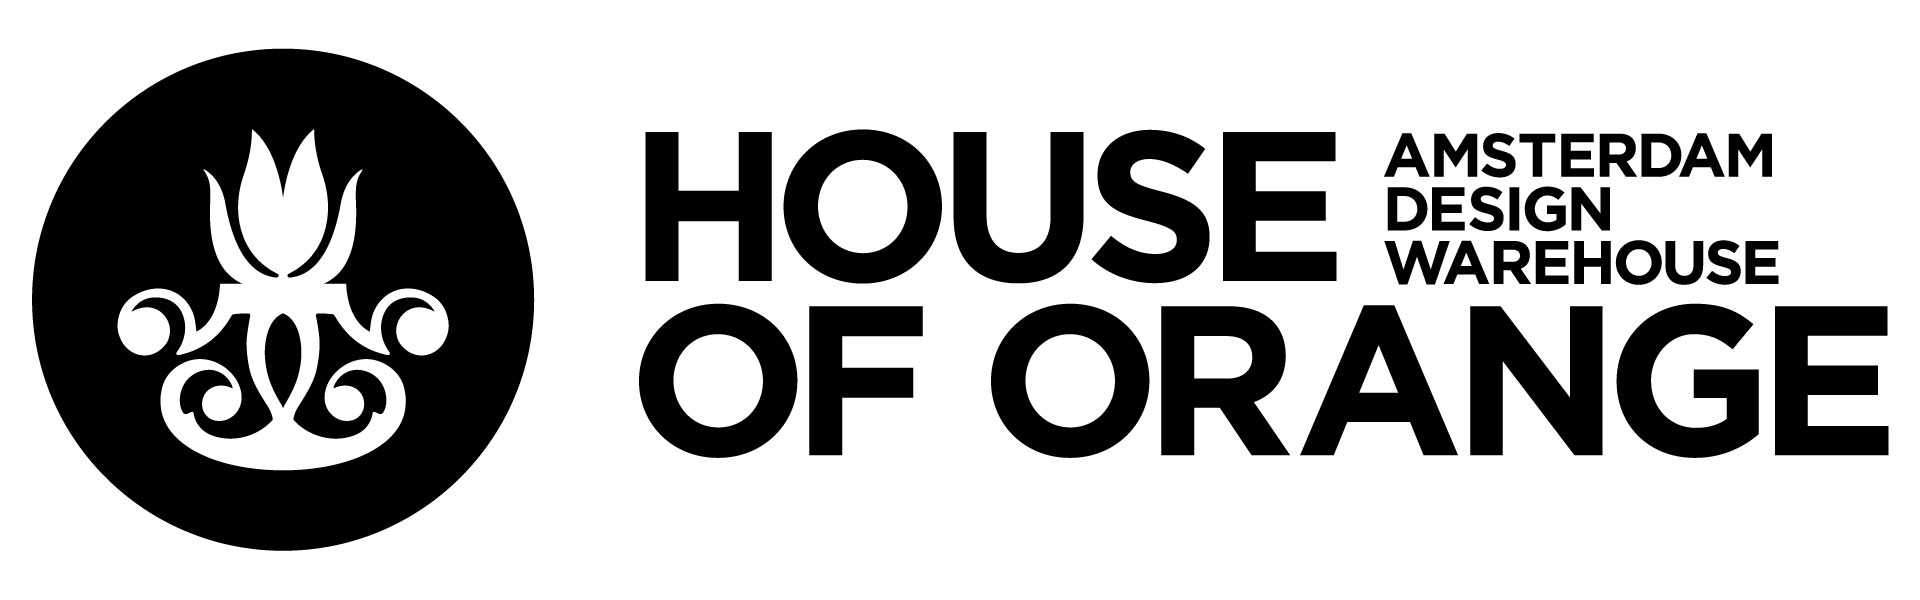 house of orange